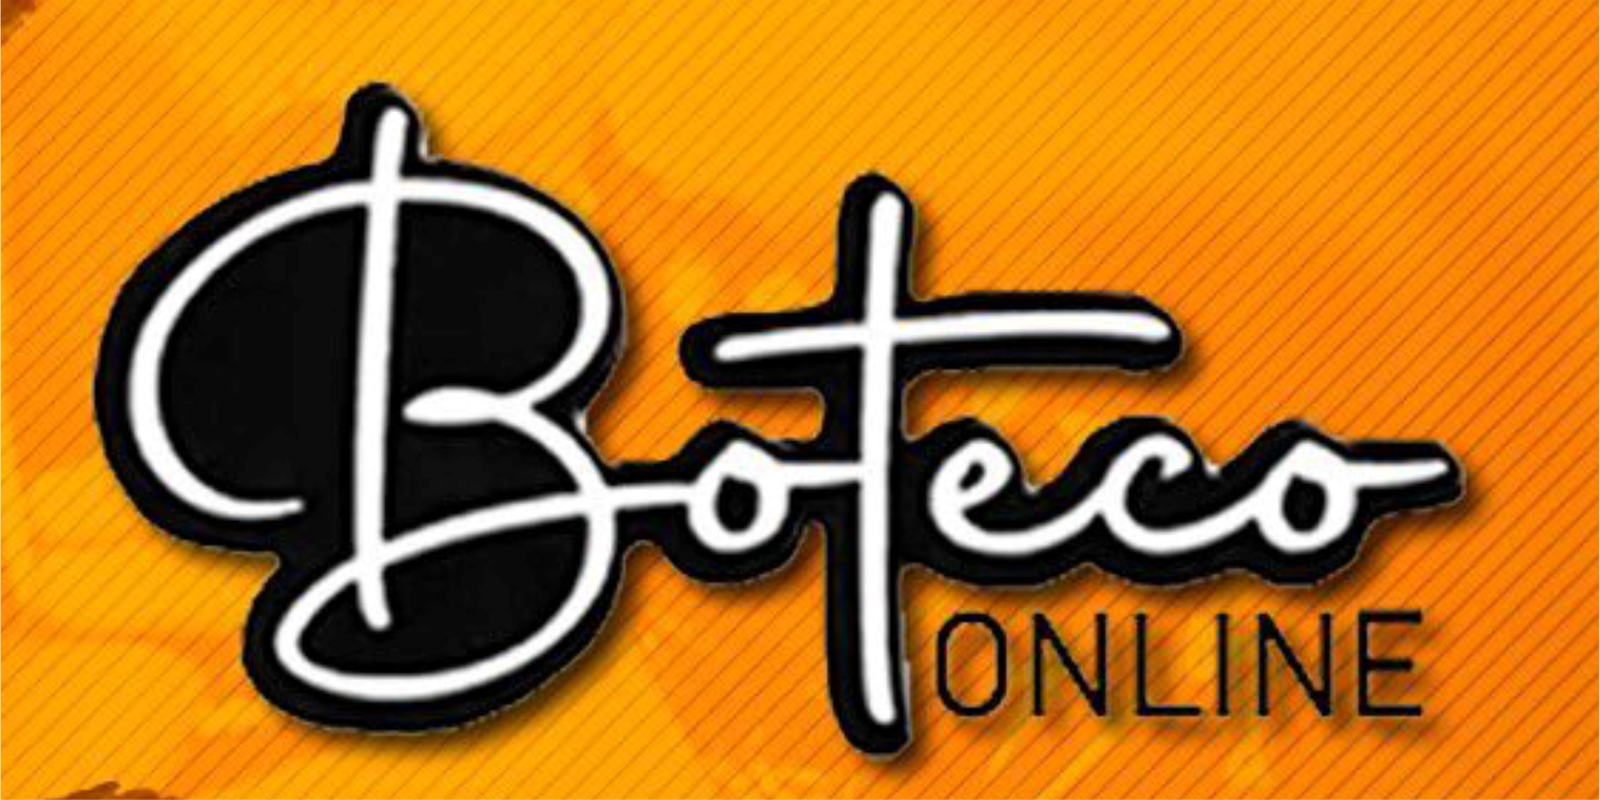 Boteco Online